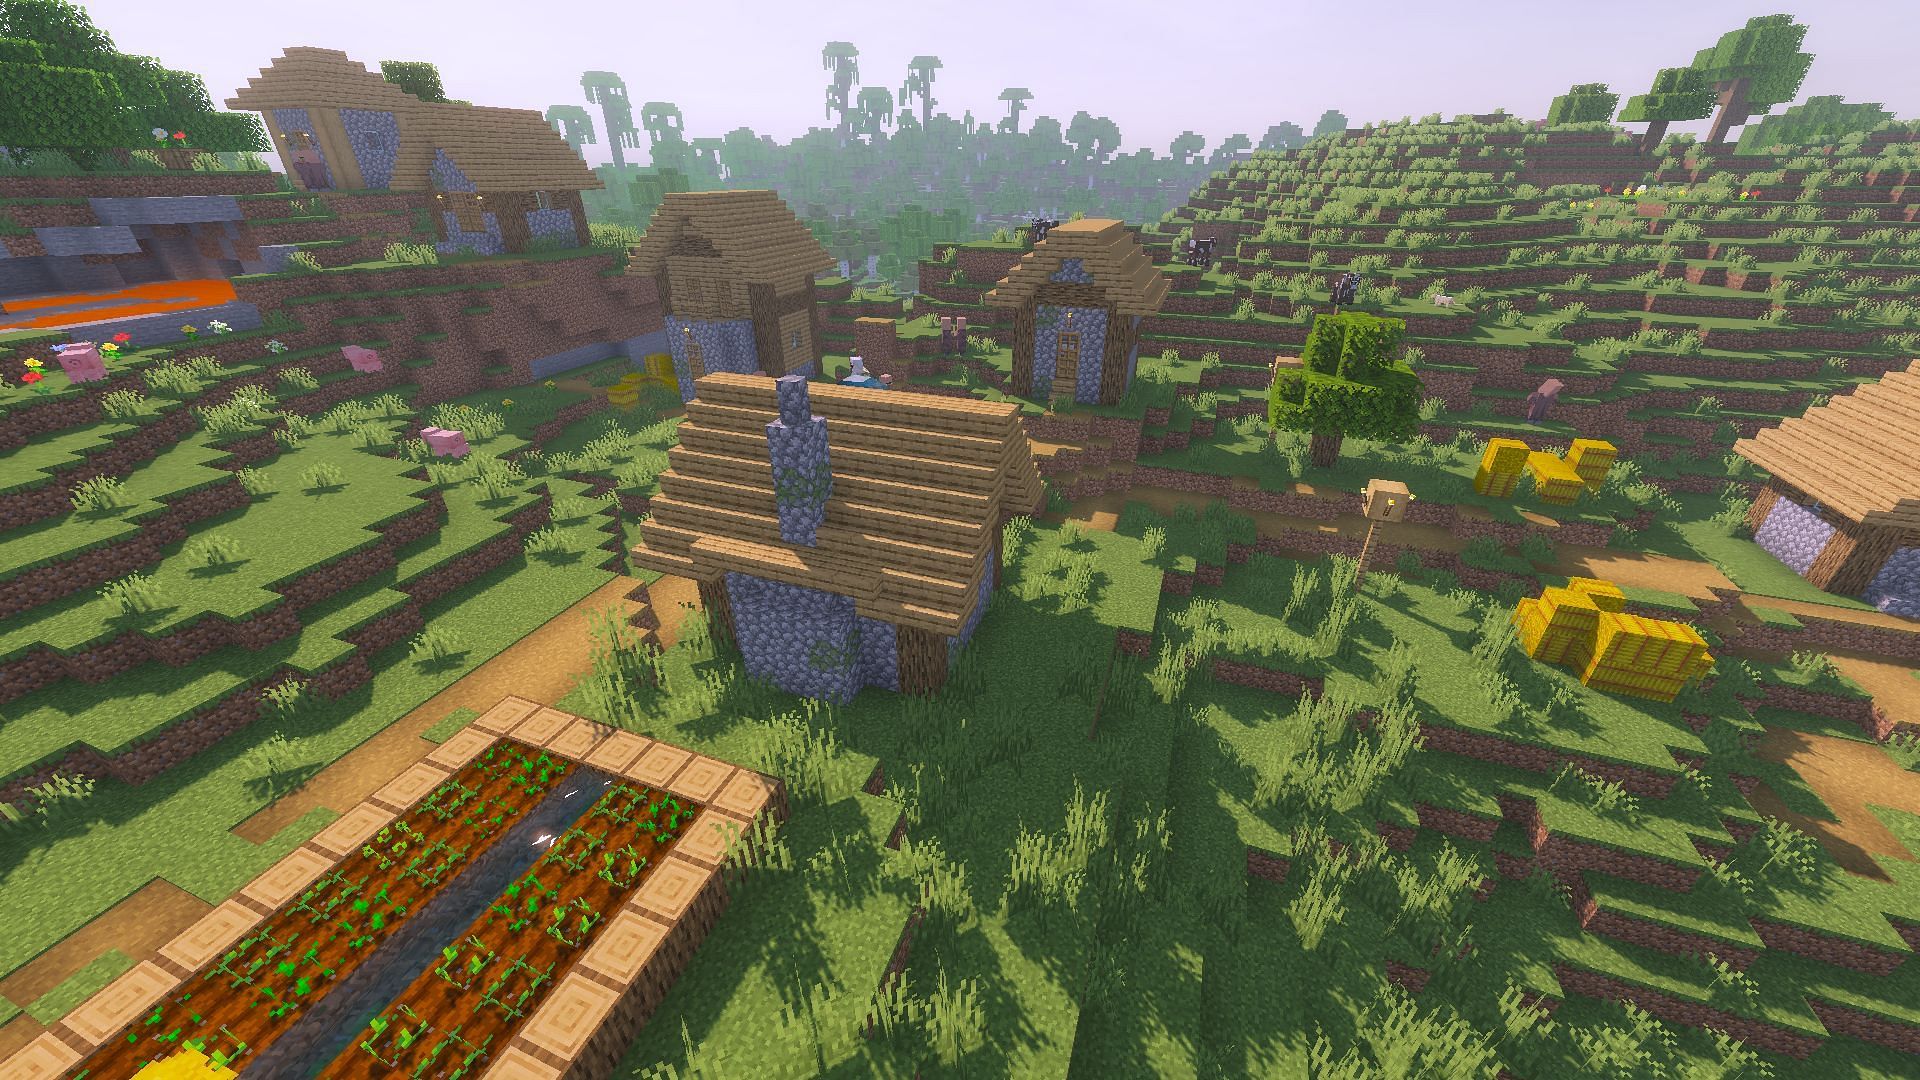 The plains village using the KUDA shaders (Image via Minecraft)